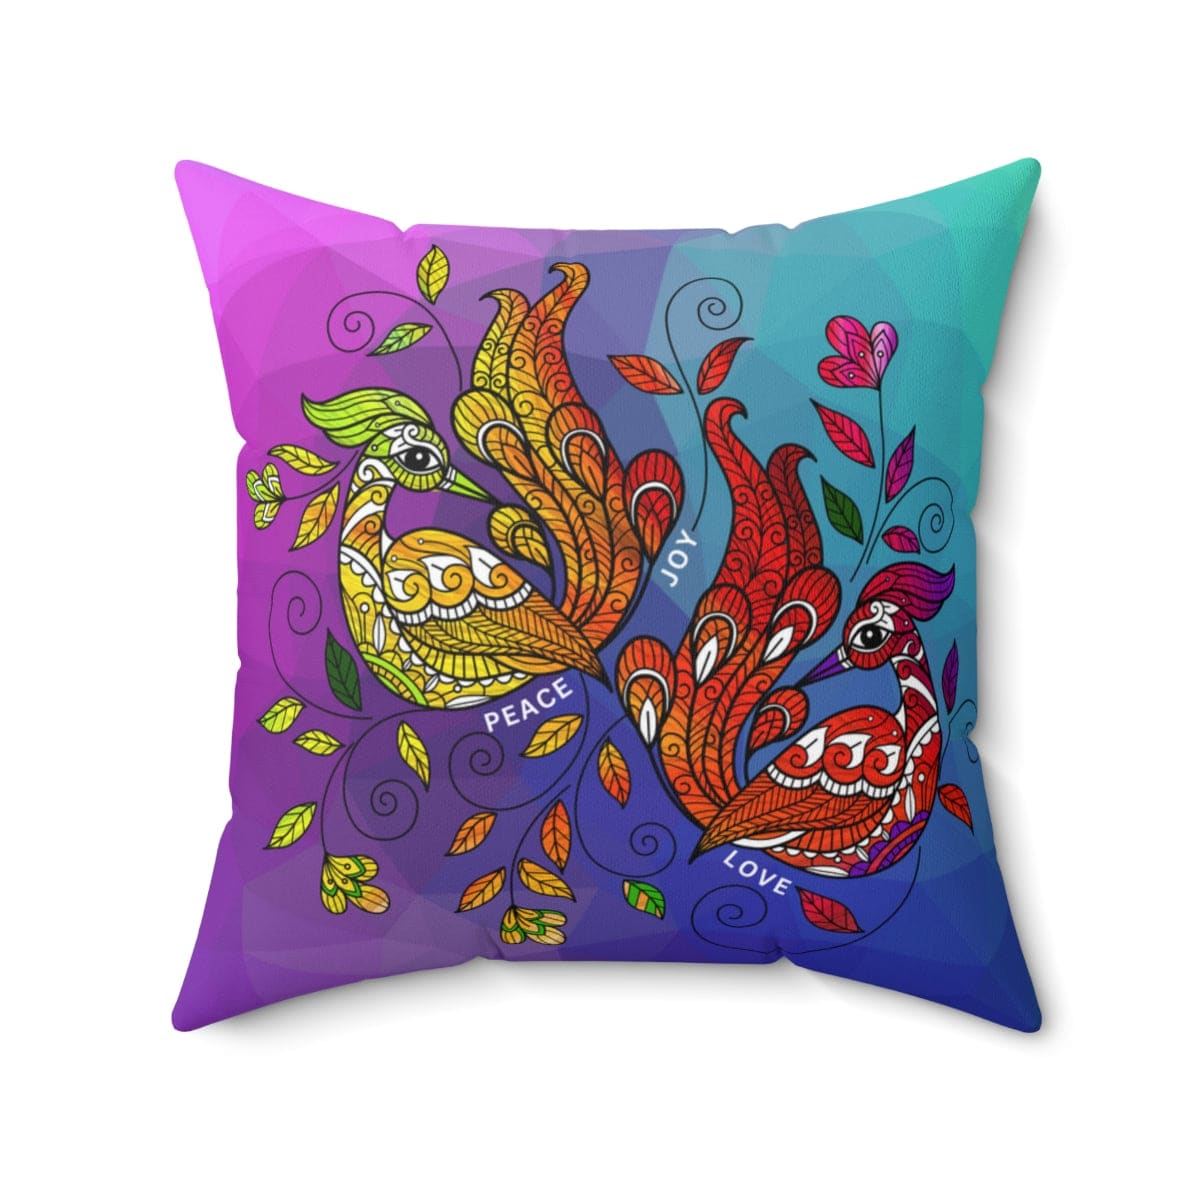 Decorative Throw Pillow Cover Multicolor Wild Peacocks Print V3 - Decorative